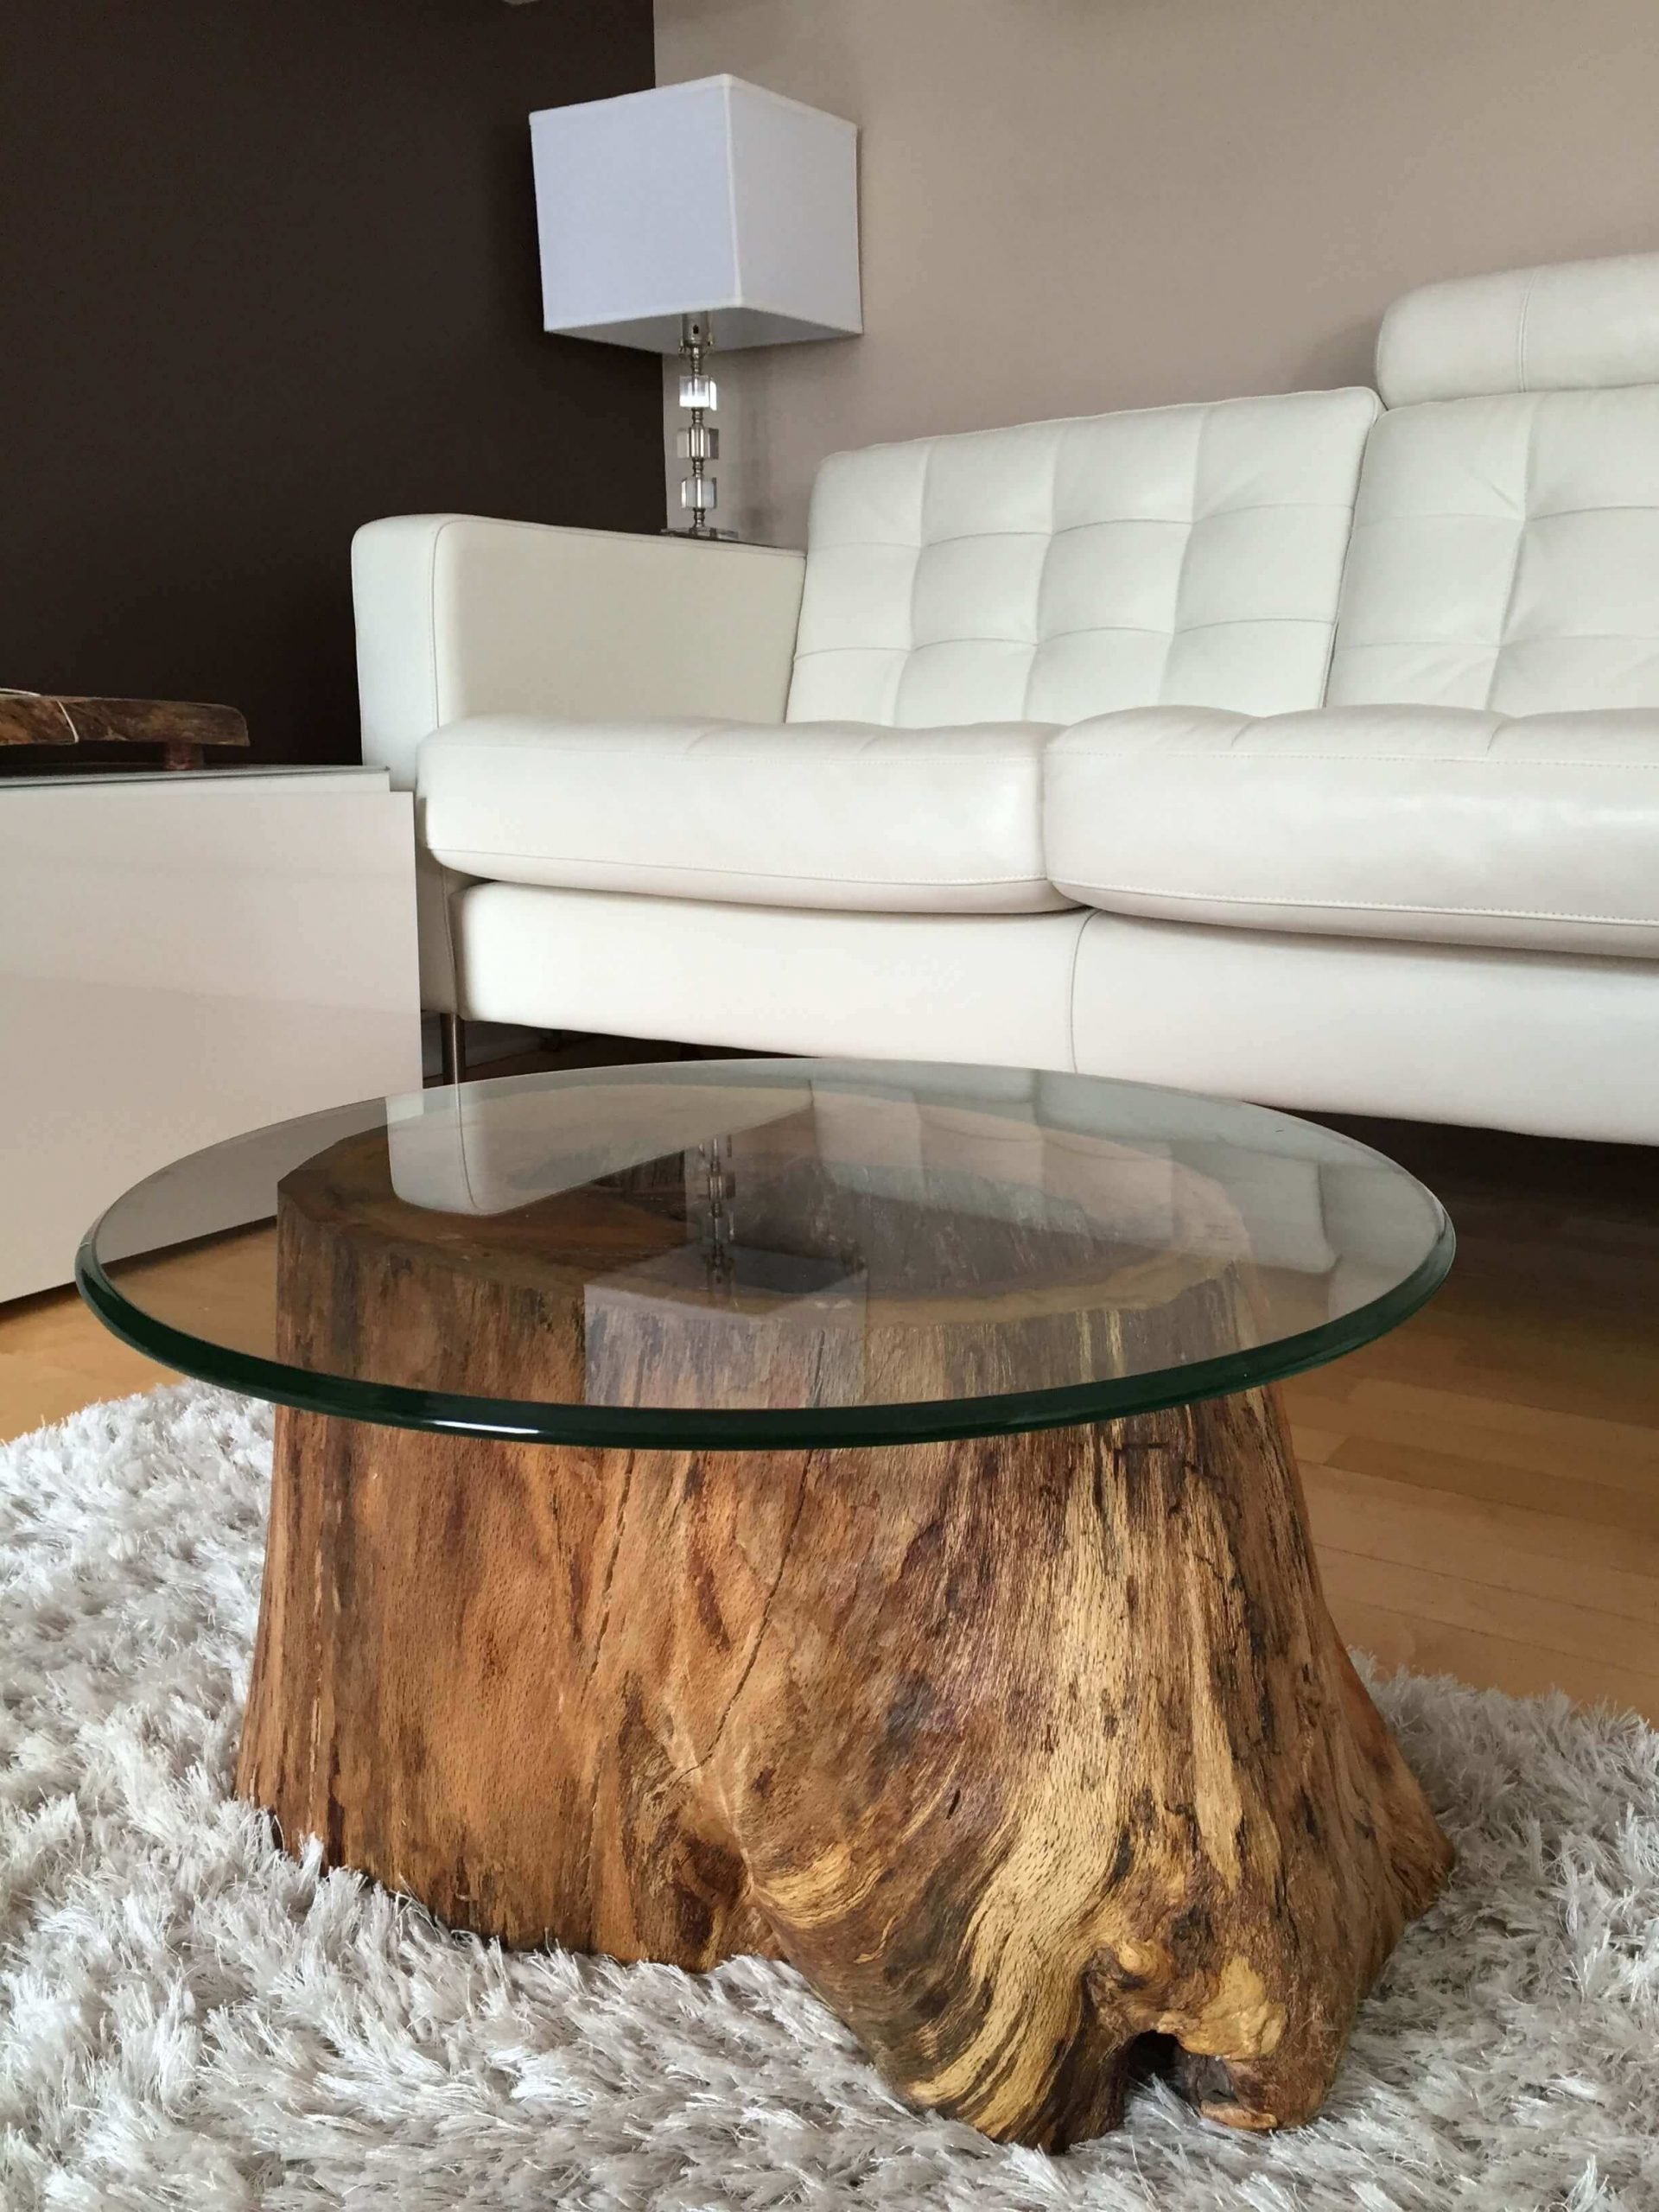  Log Table center table design